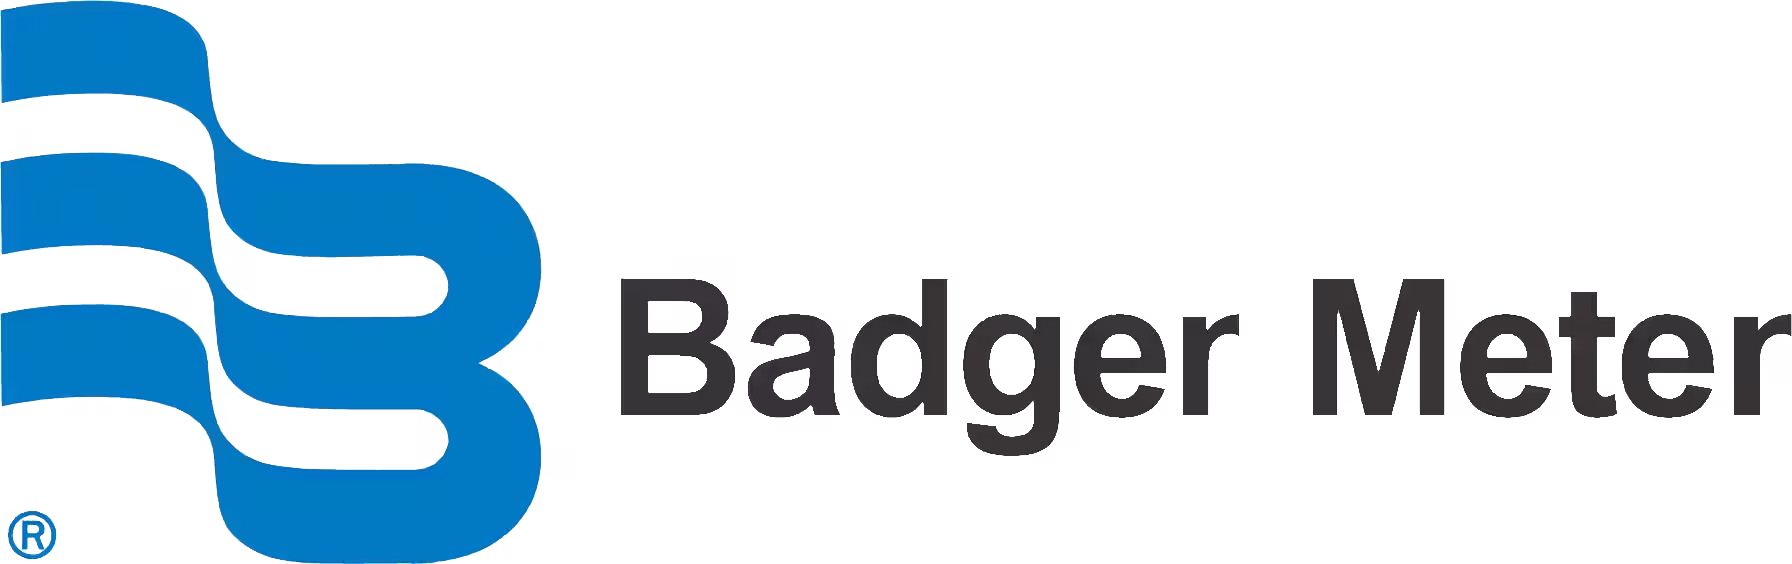 Logo of Badger Meter.